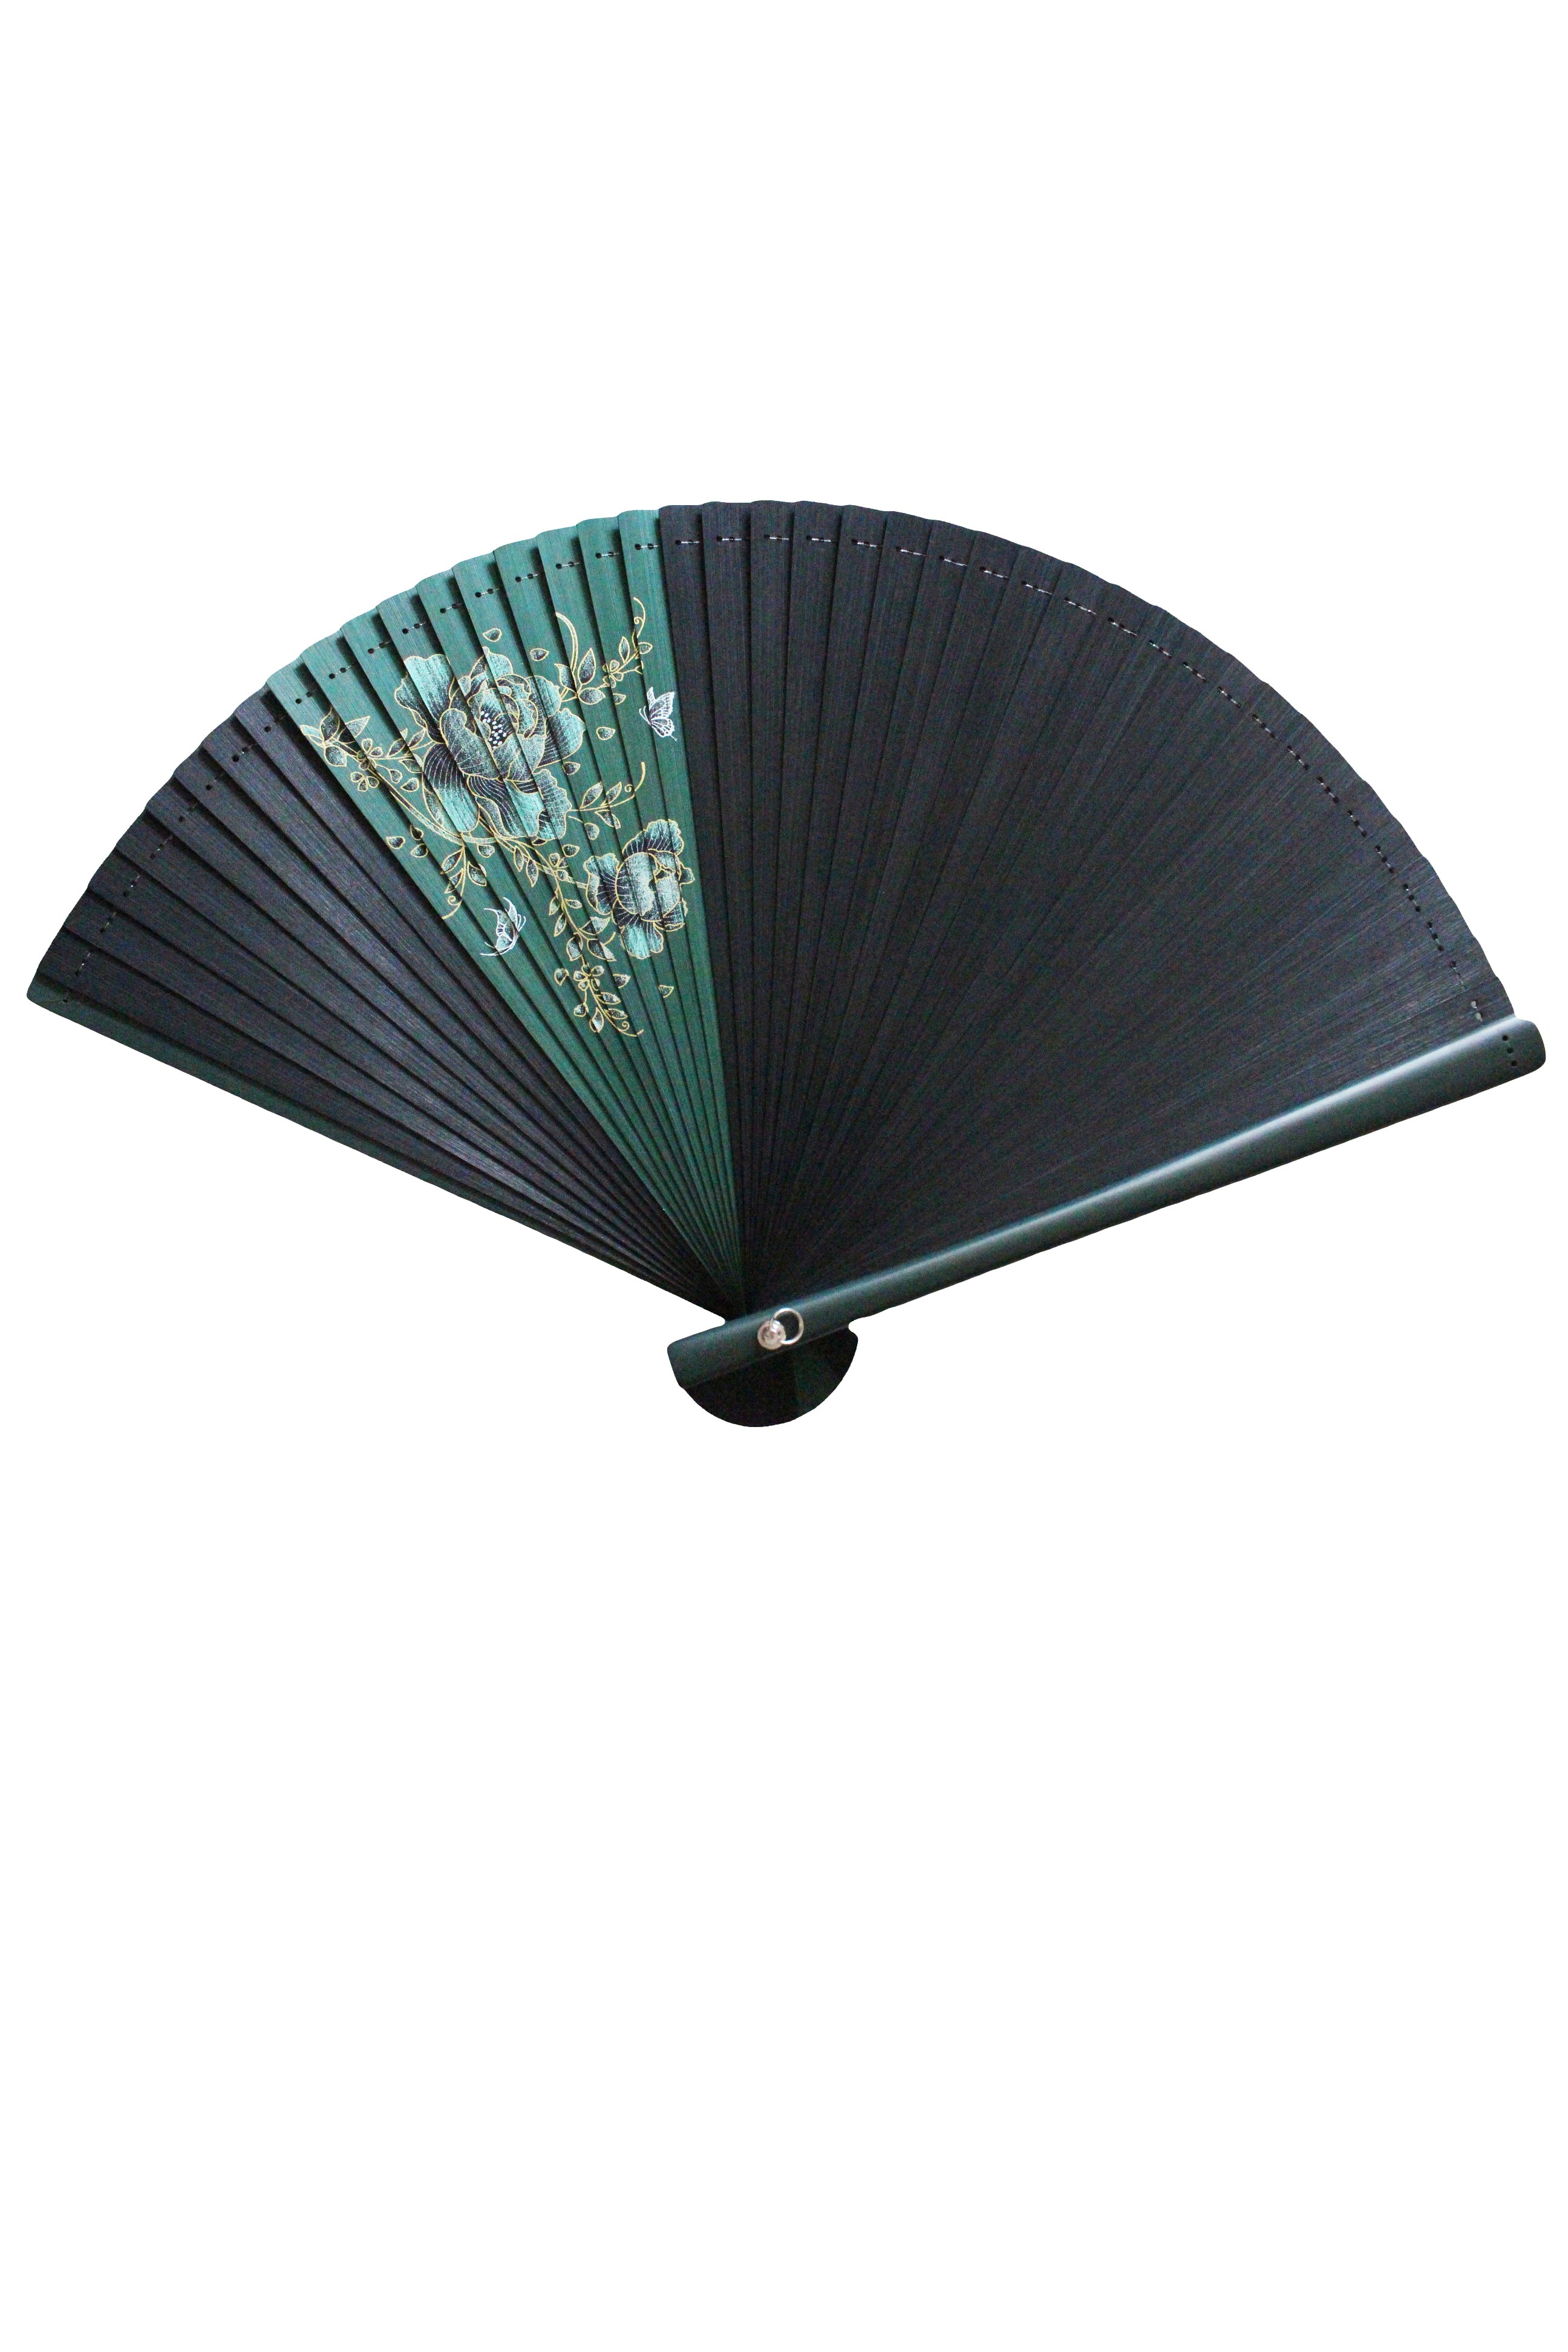 Black and Green Chrysanthemum Bamboo Fan